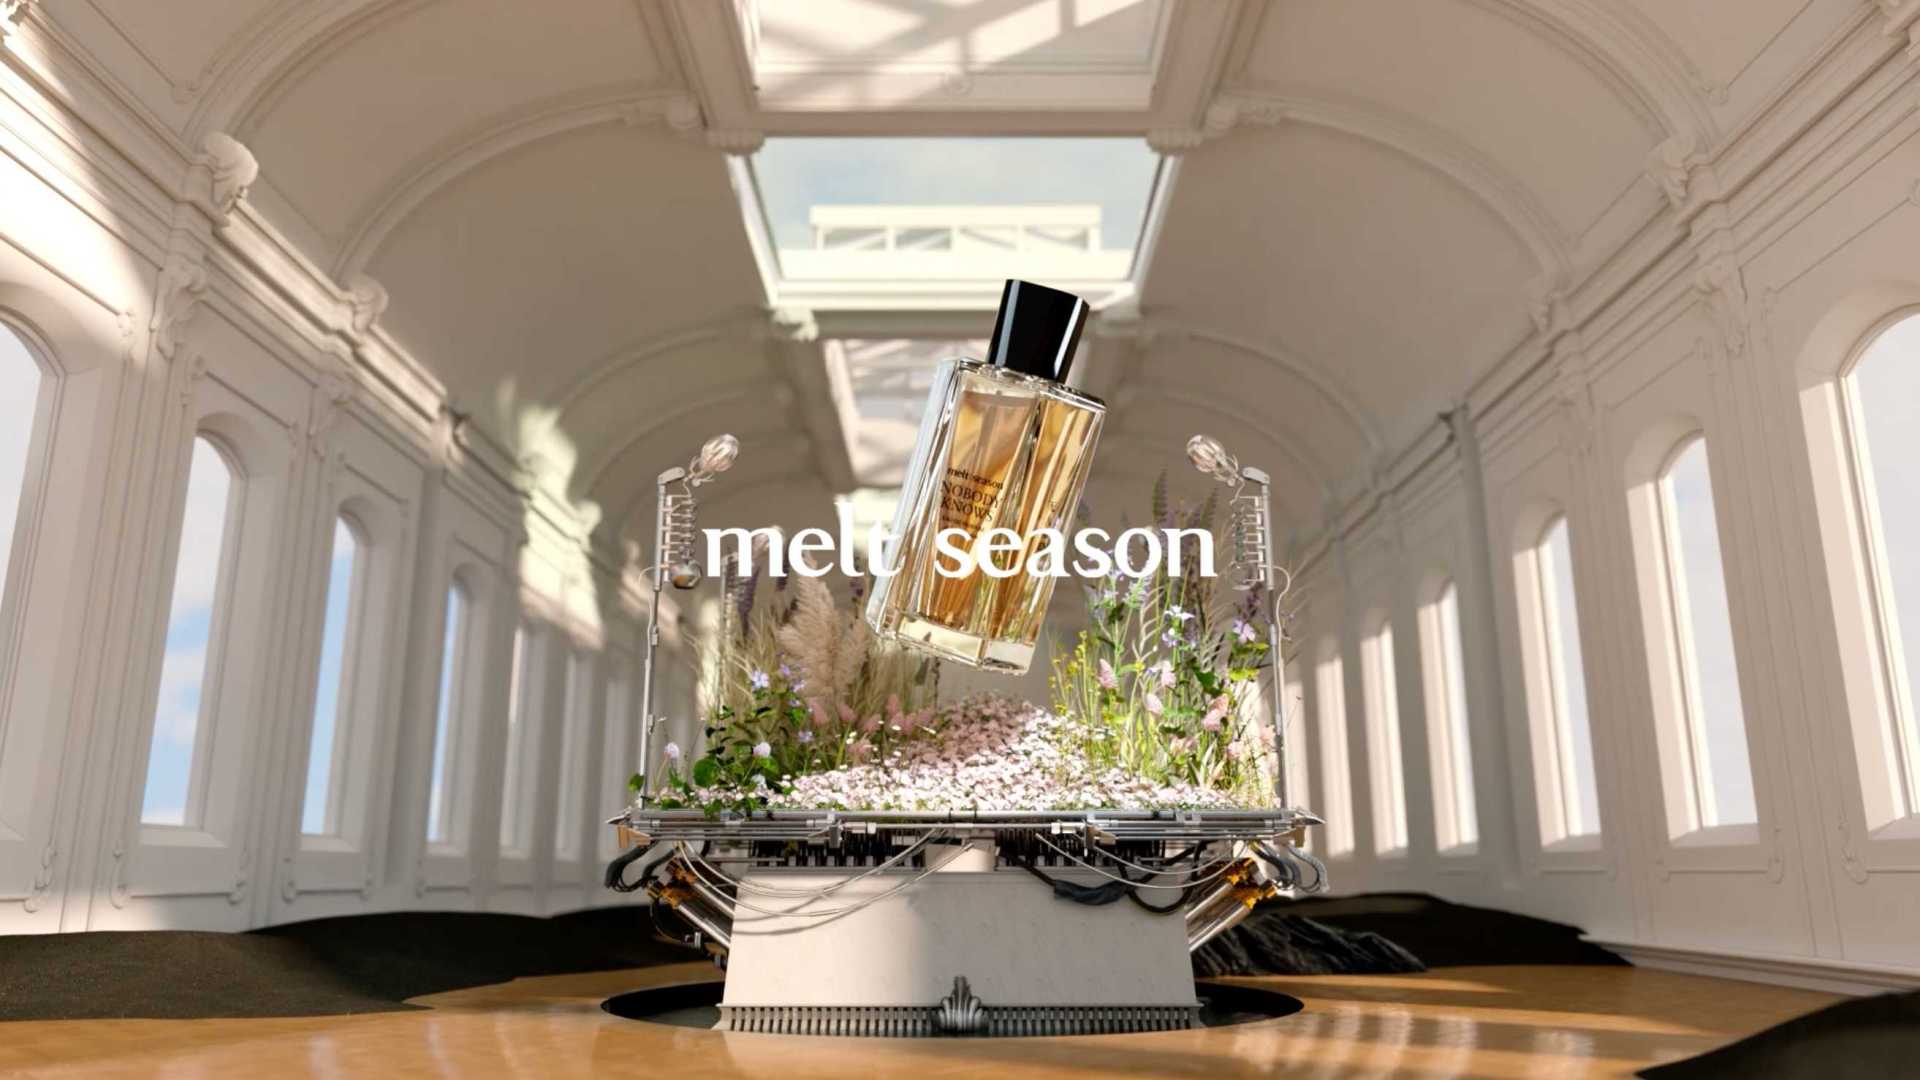 Melt season 『瓶』 行世界CG广告